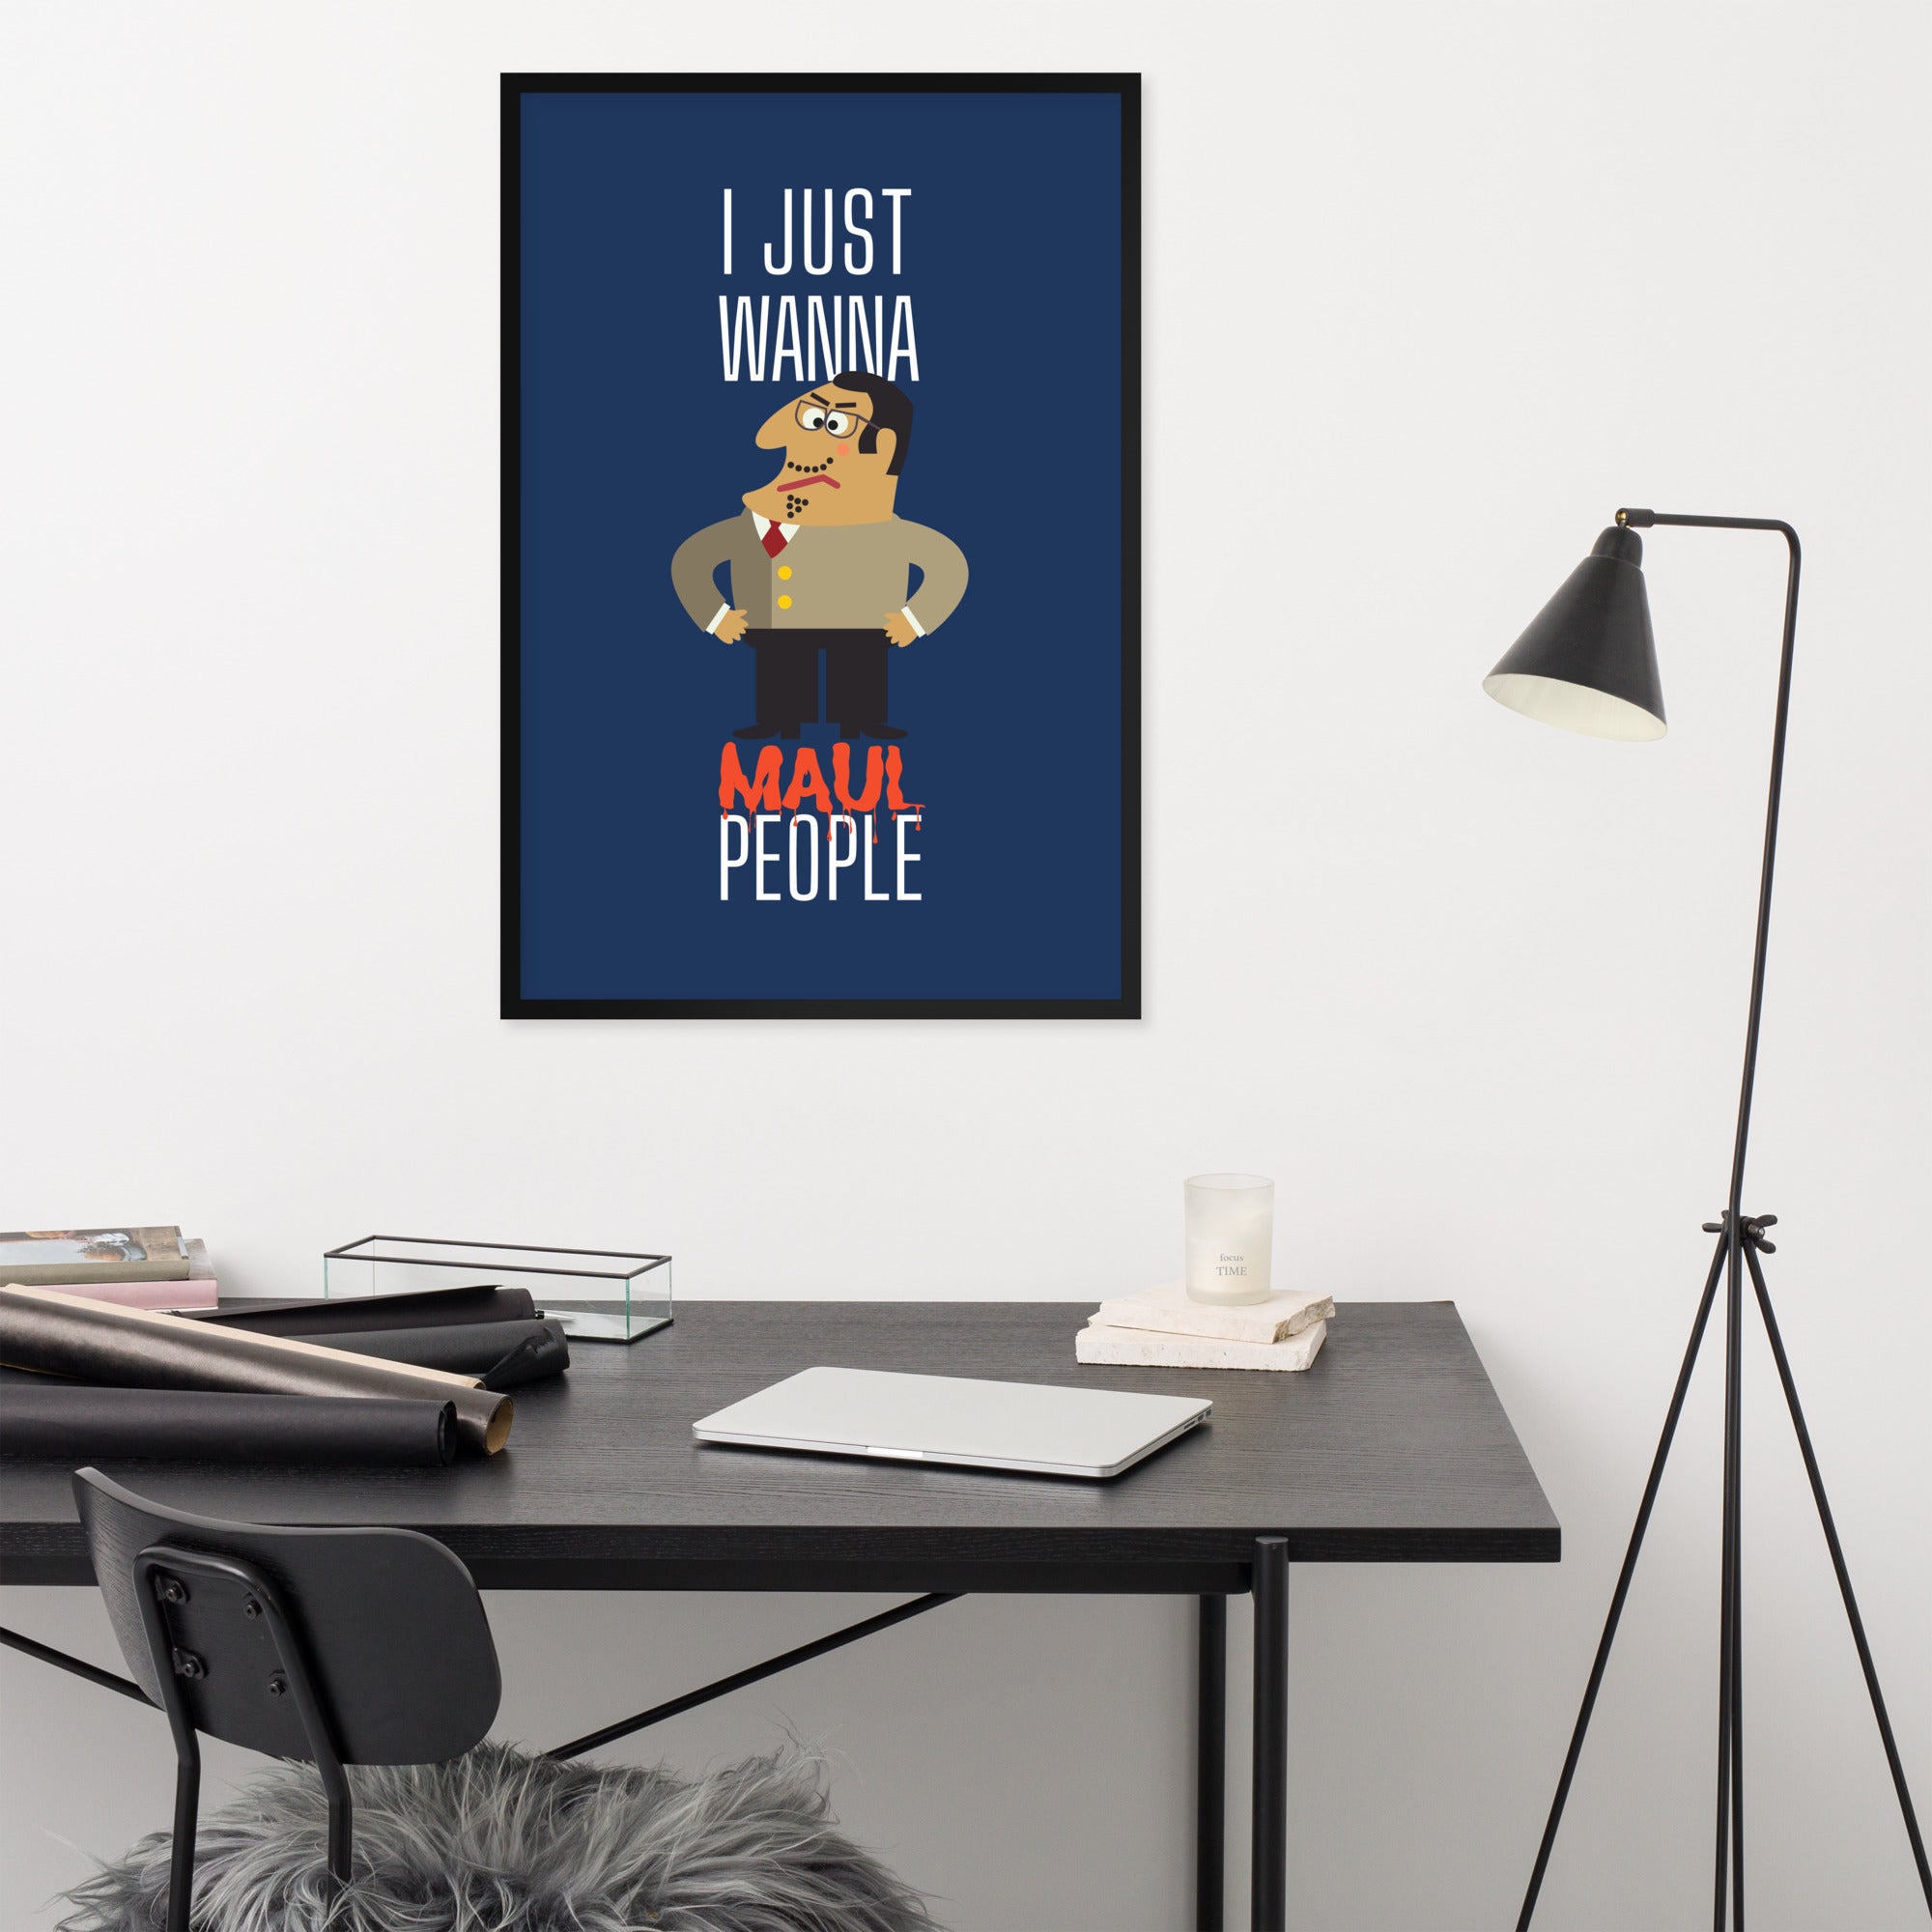 Khabib Nurmagomedov Trash Talk: I just wanna MAUL people - Horrible Bosses Version (Dark Blue) Posters